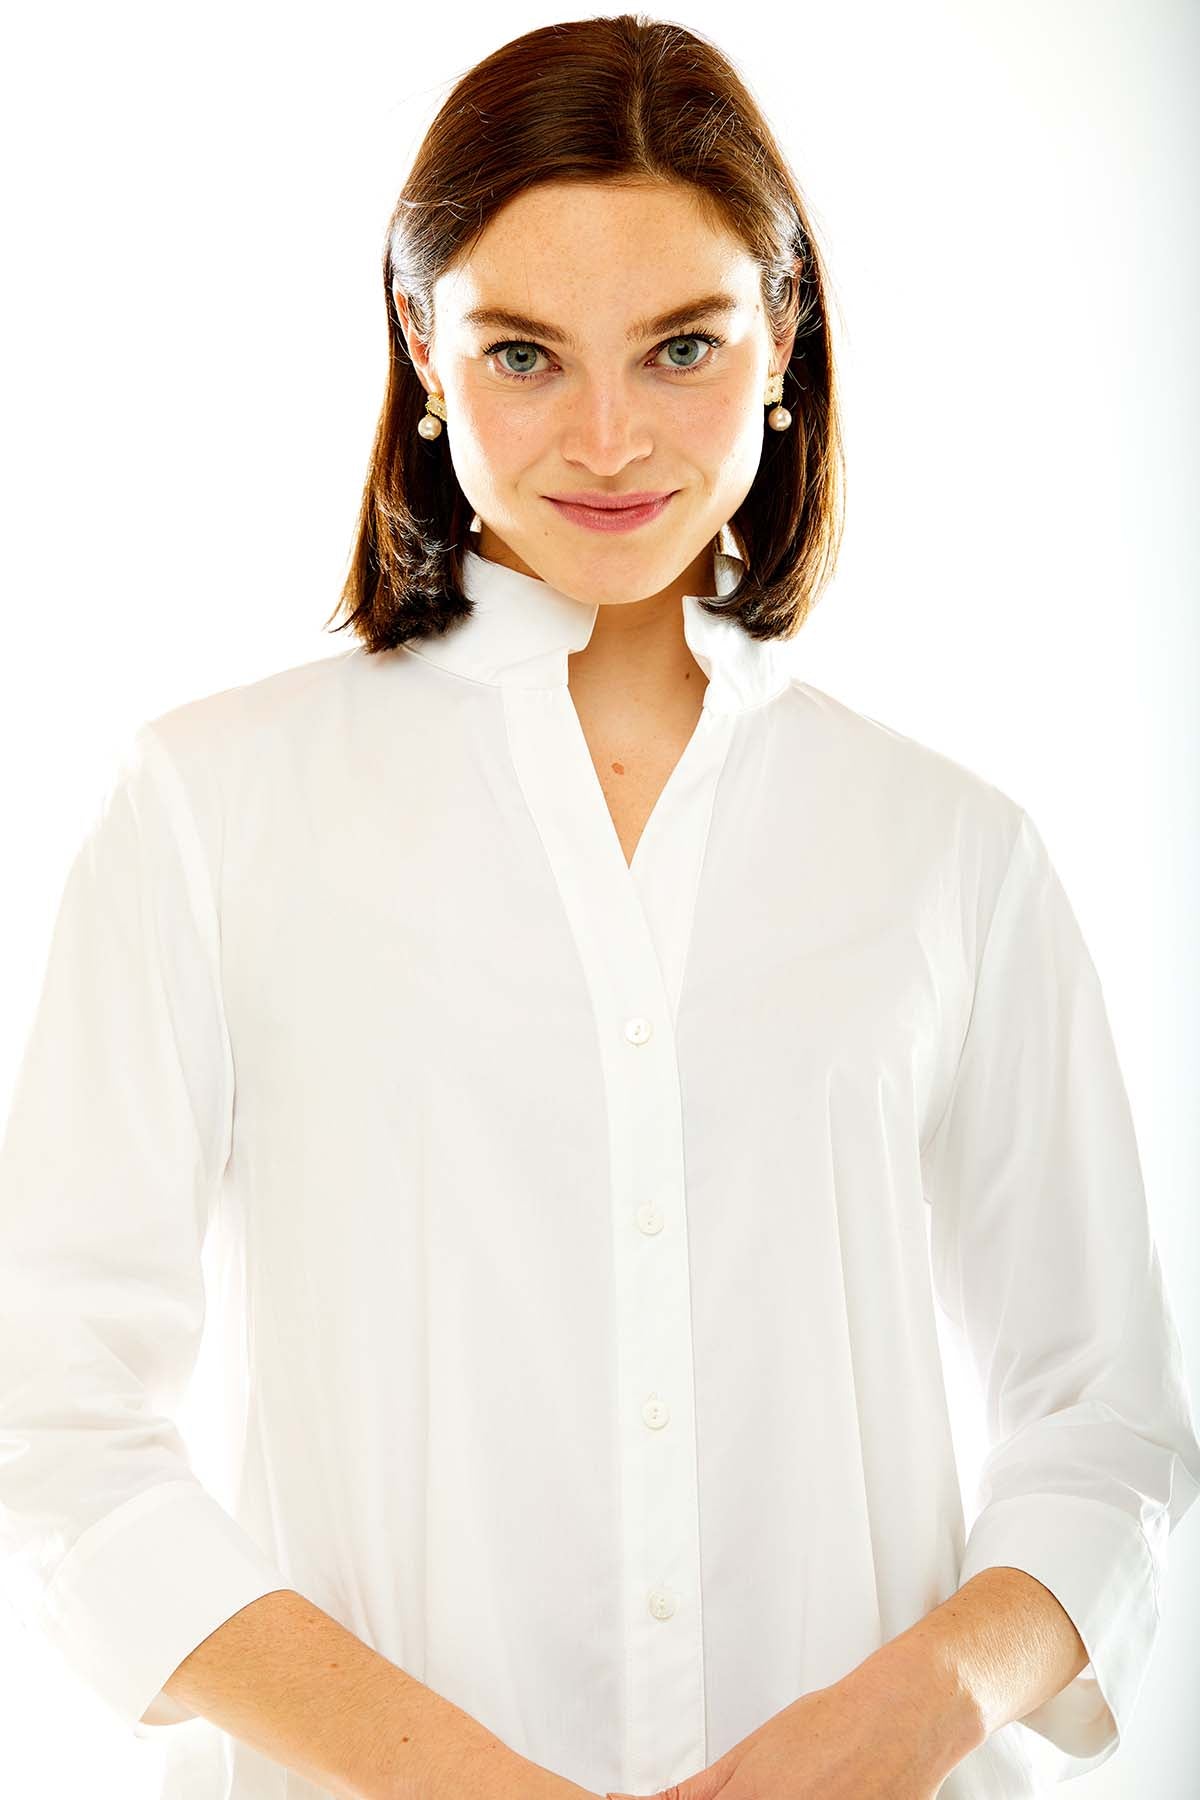 Woman in white tunic